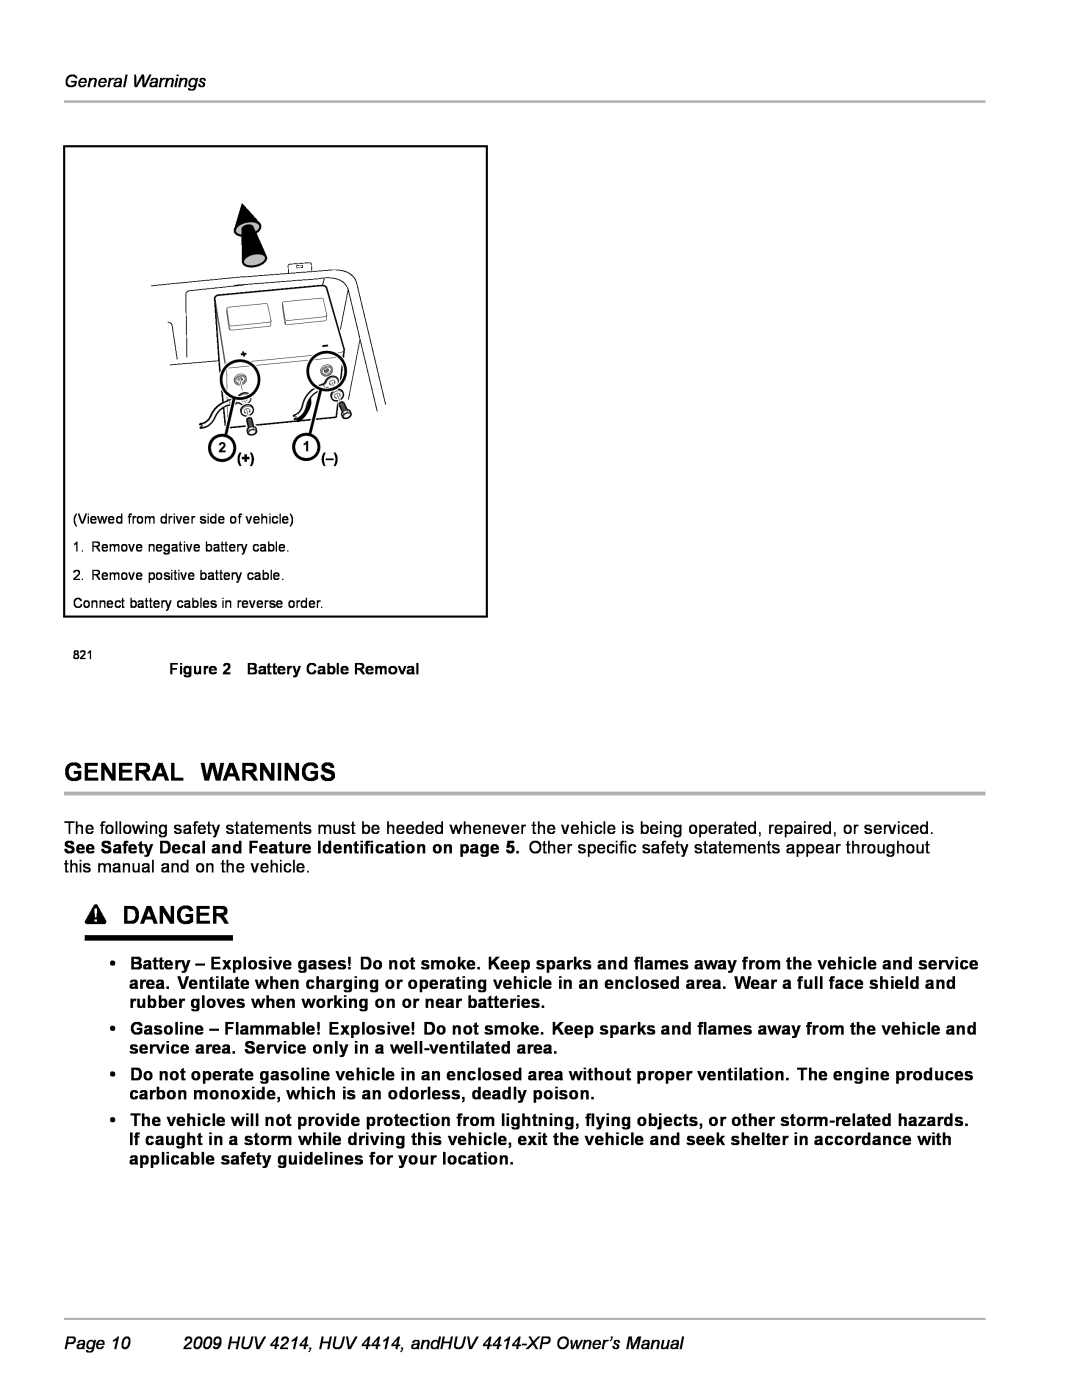 Husqvarna owner manual General Warnings, Page 10 2009 HUV 4214, HUV 4414, andHUV 4414-XP Owner’s Manual, Danger 